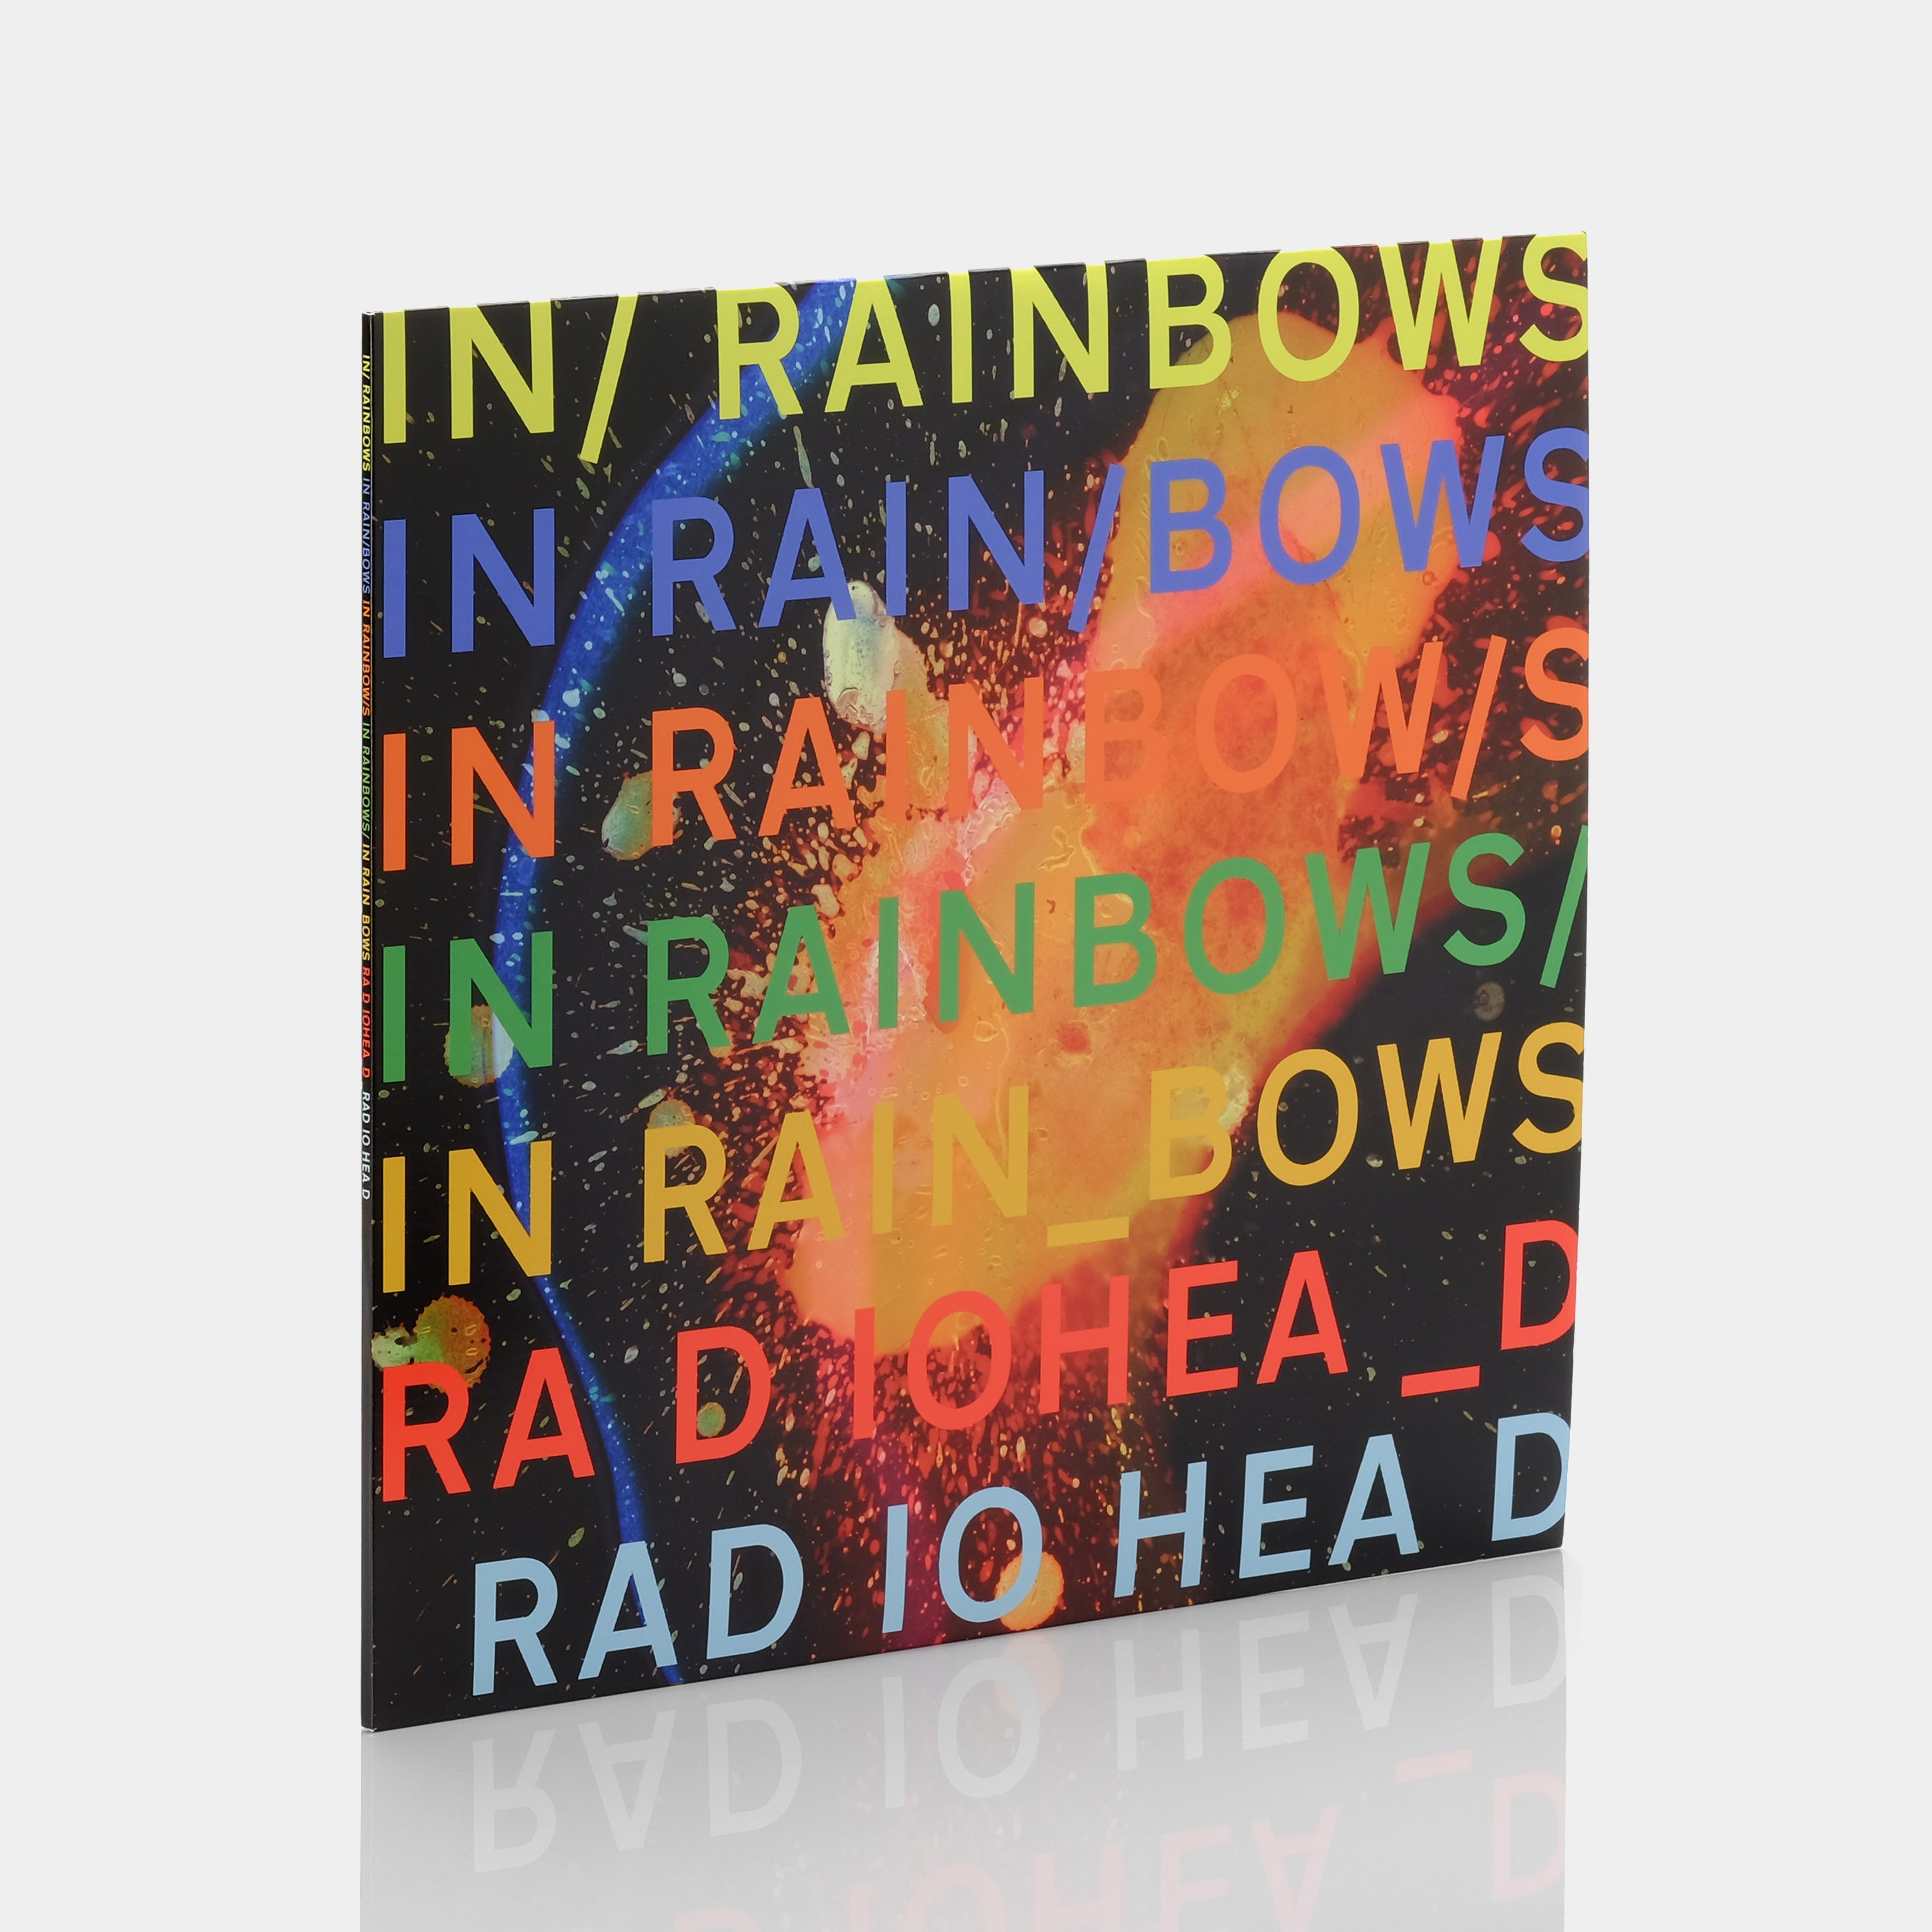 Radiohead - In Rainbows LP Vinyl Record